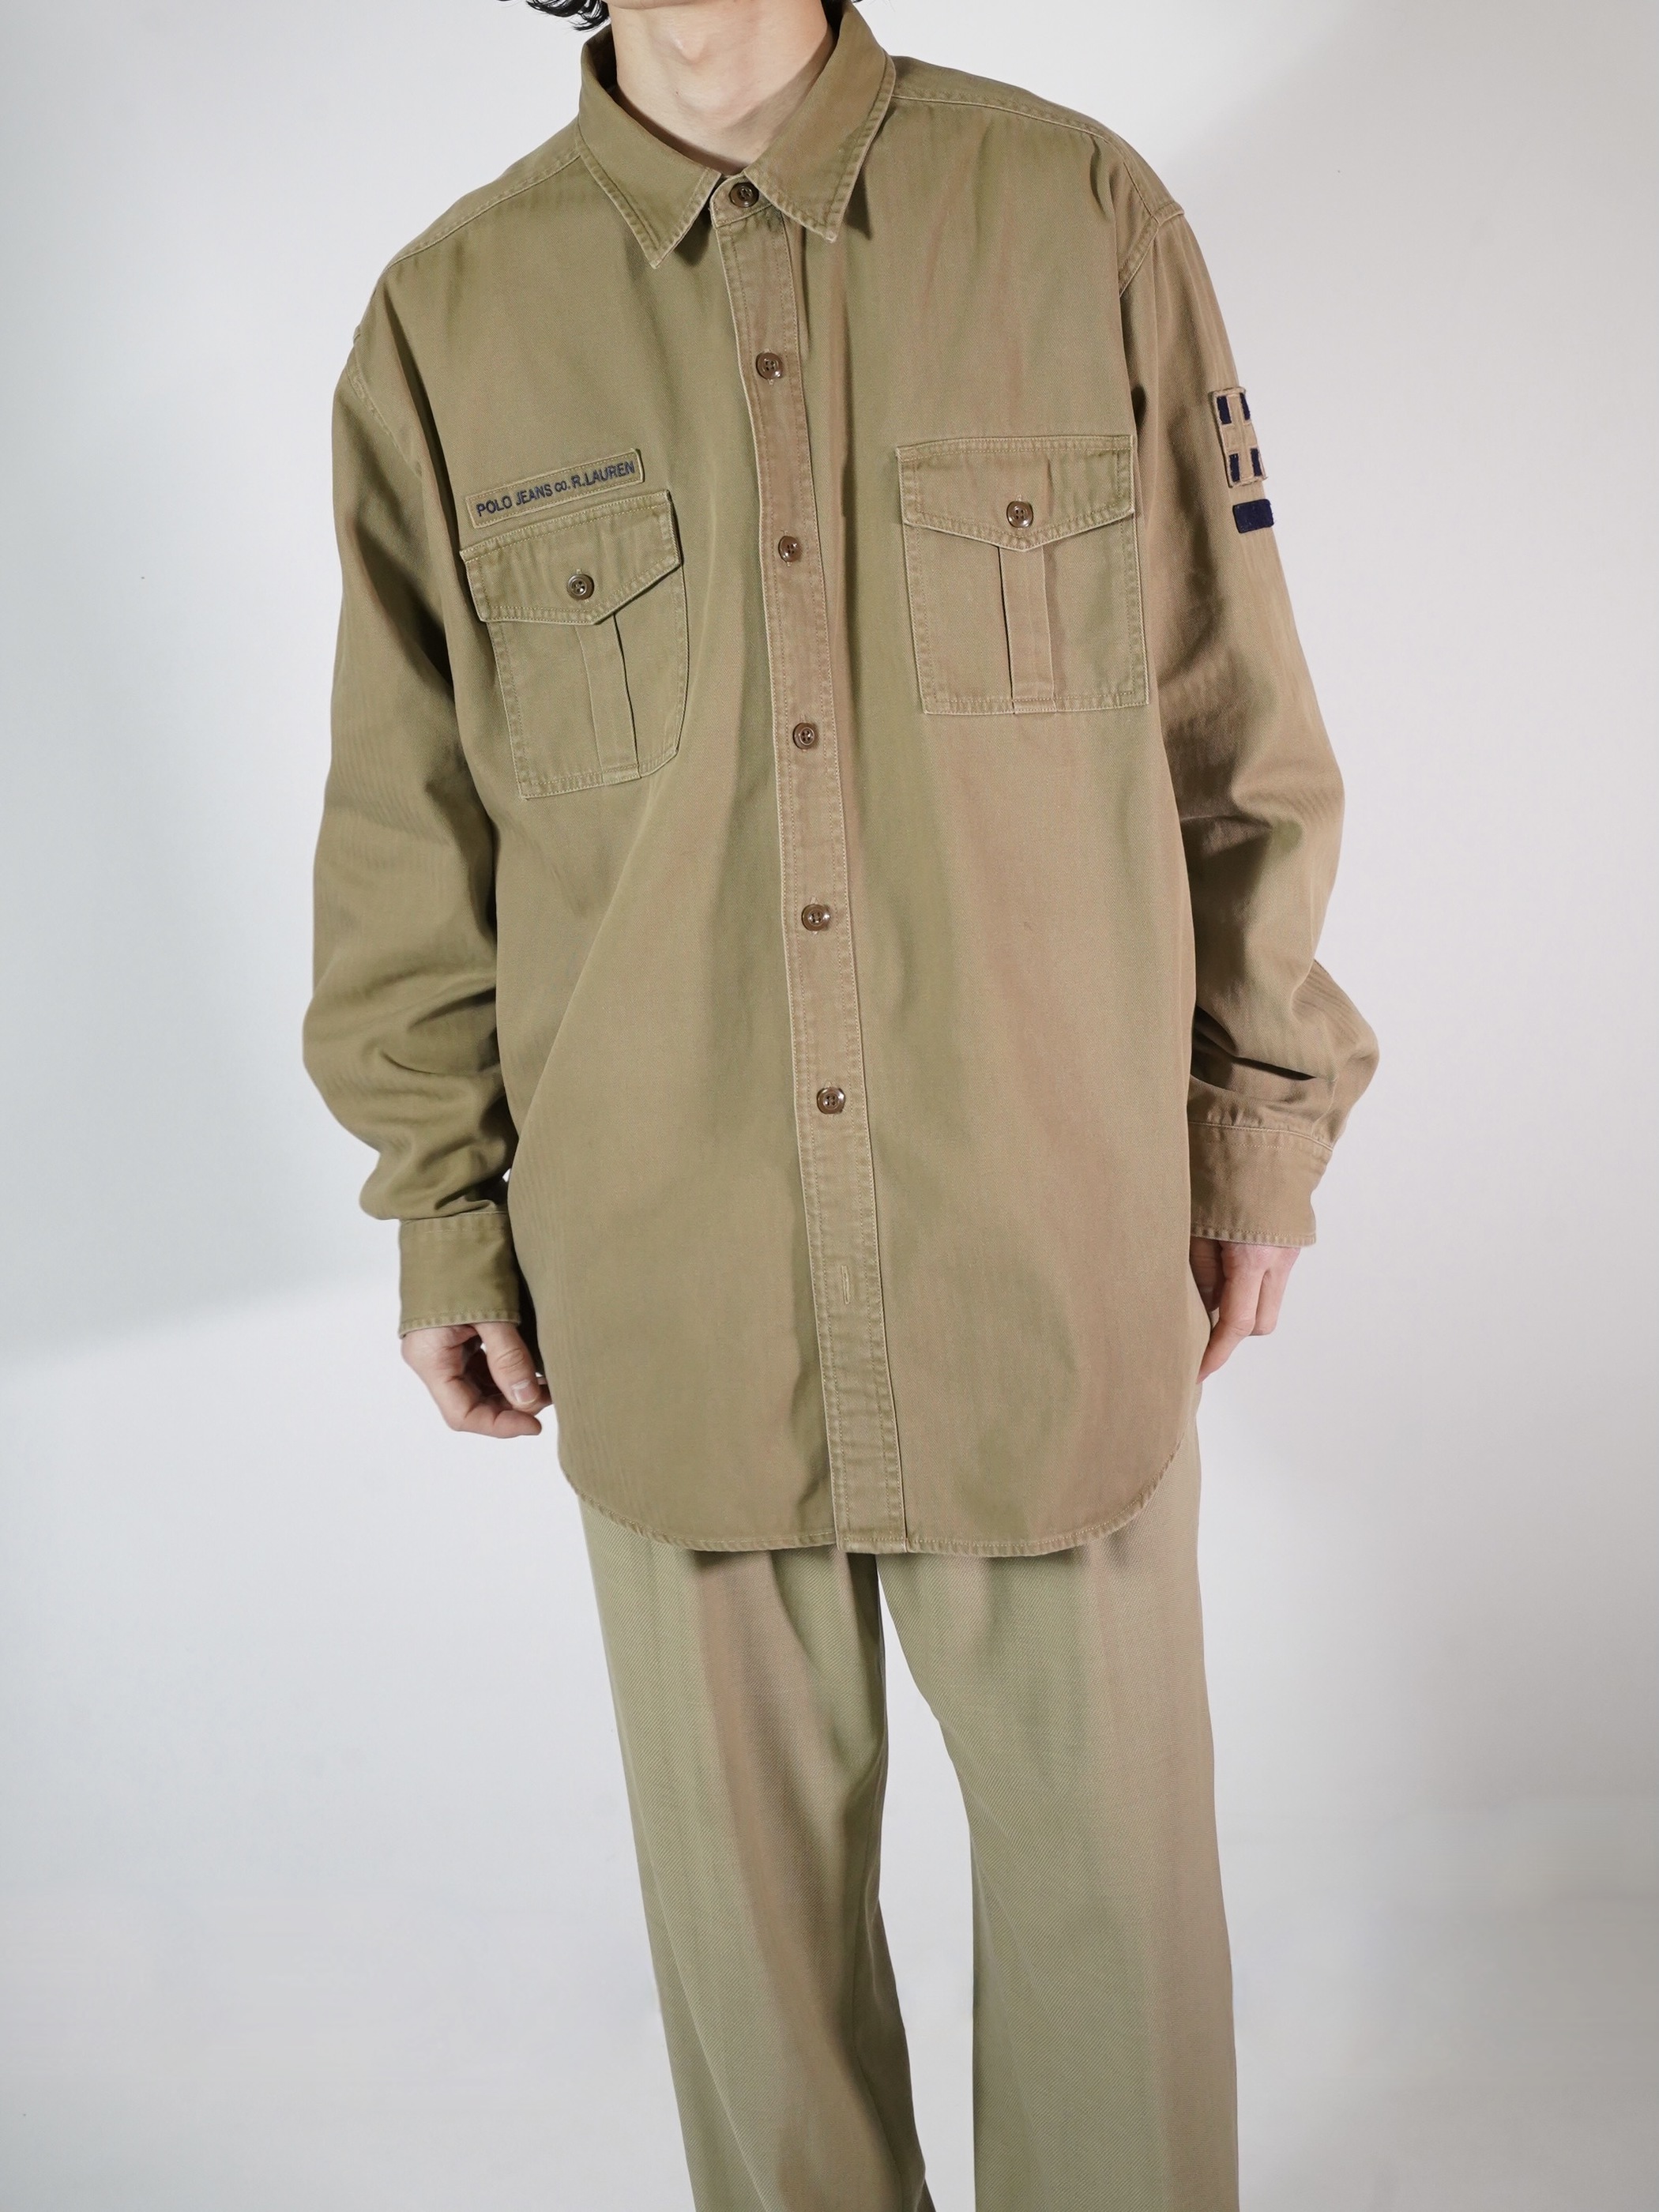 1990's POLO JEANS CO Military Utility shirts